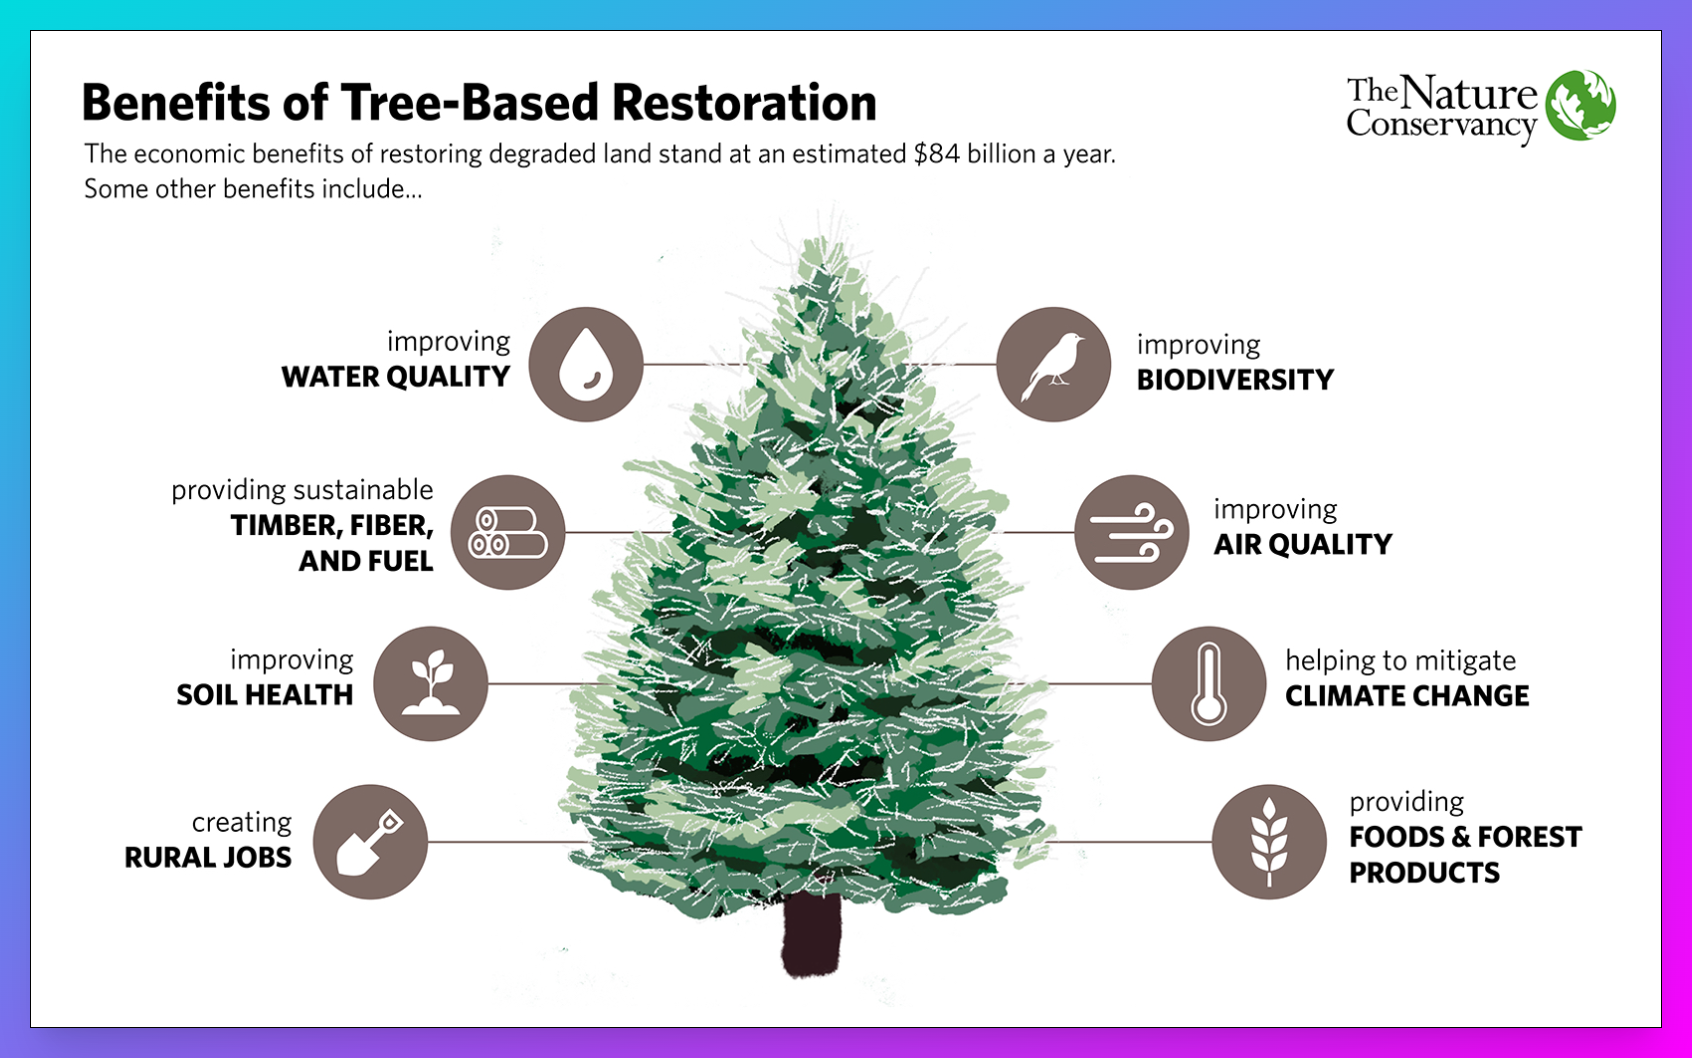 Benefits of tree-based restoration